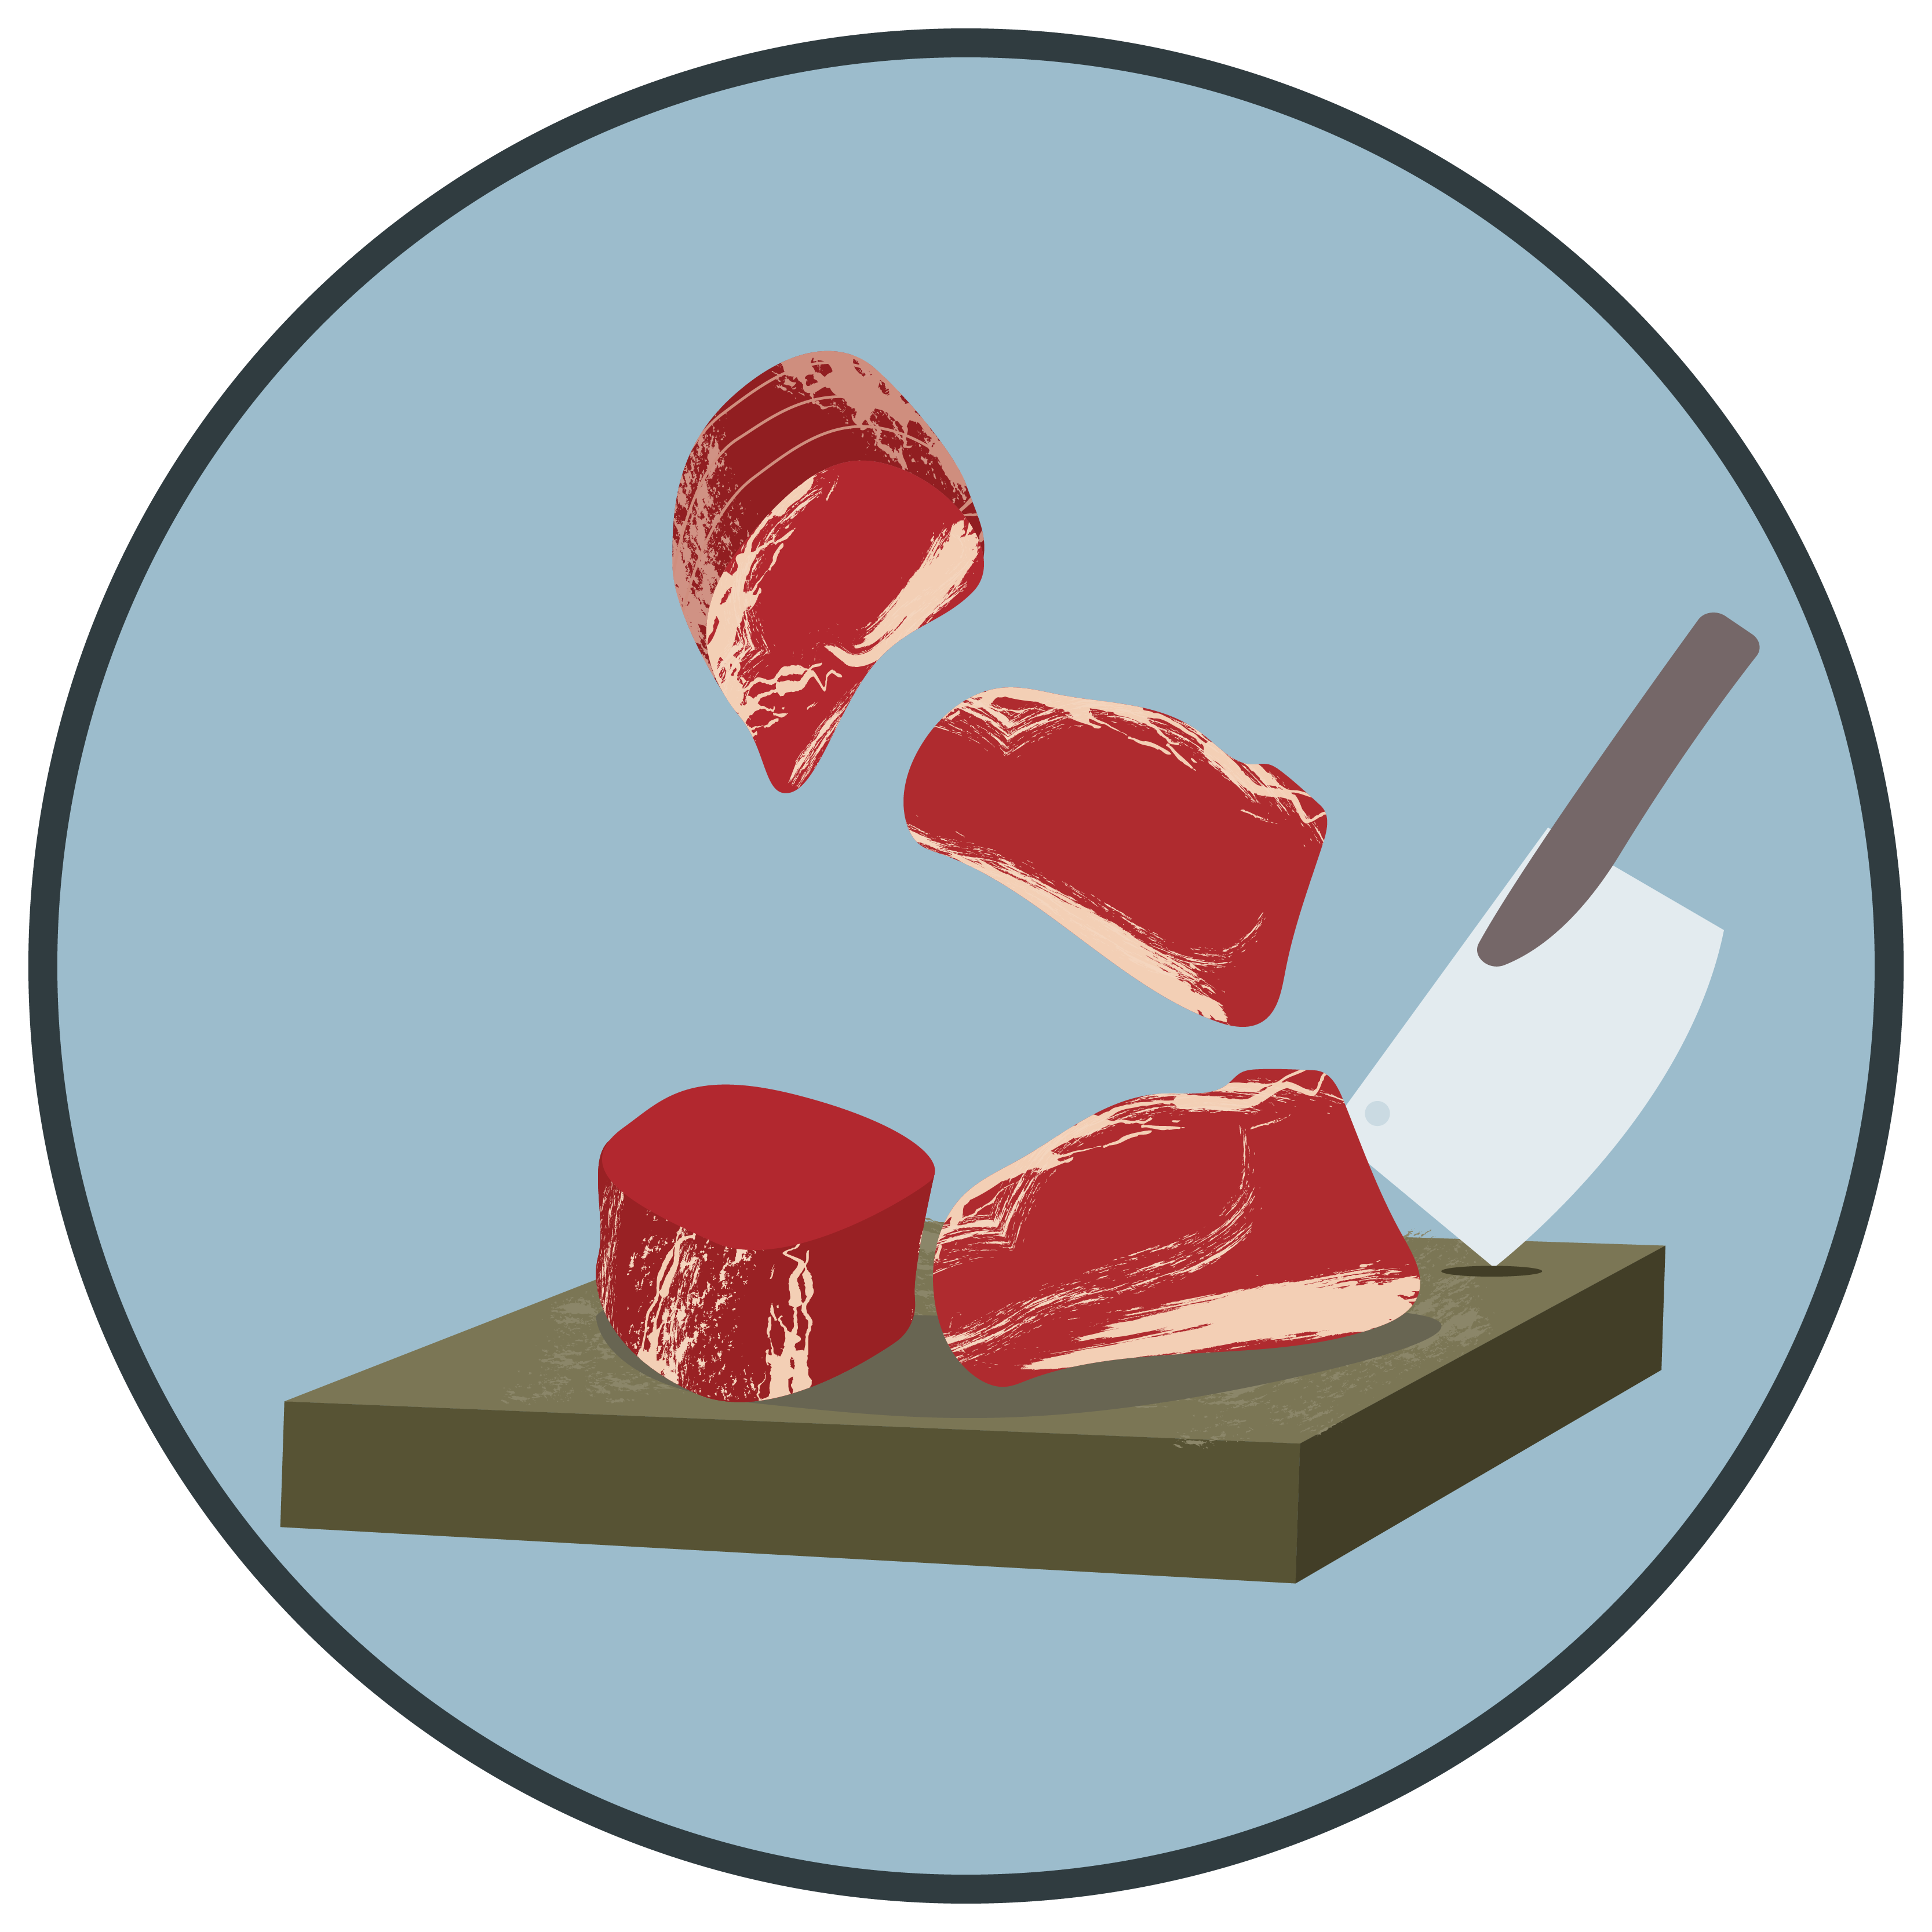 Premium Beef Butcher Box